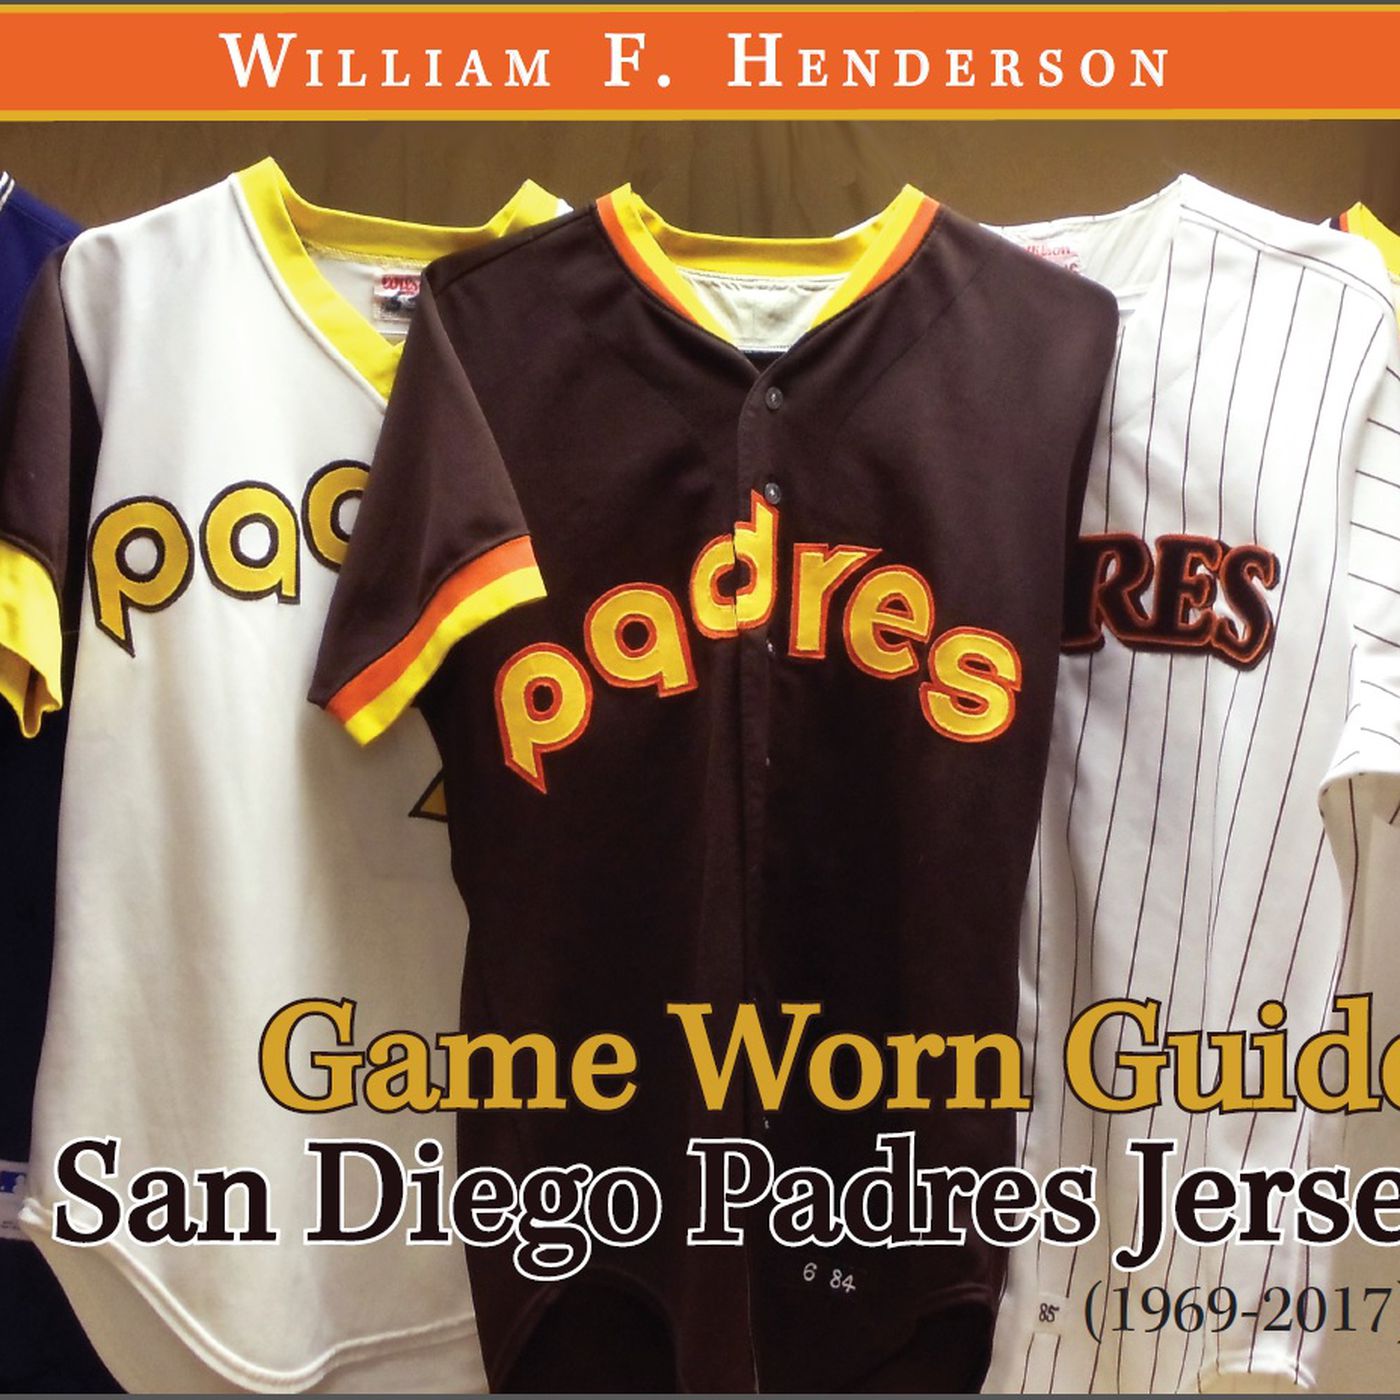 Gaslamp Ball Book Club: Game Worn Guide to San Diego Padres Jerseys -  Gaslamp Ball